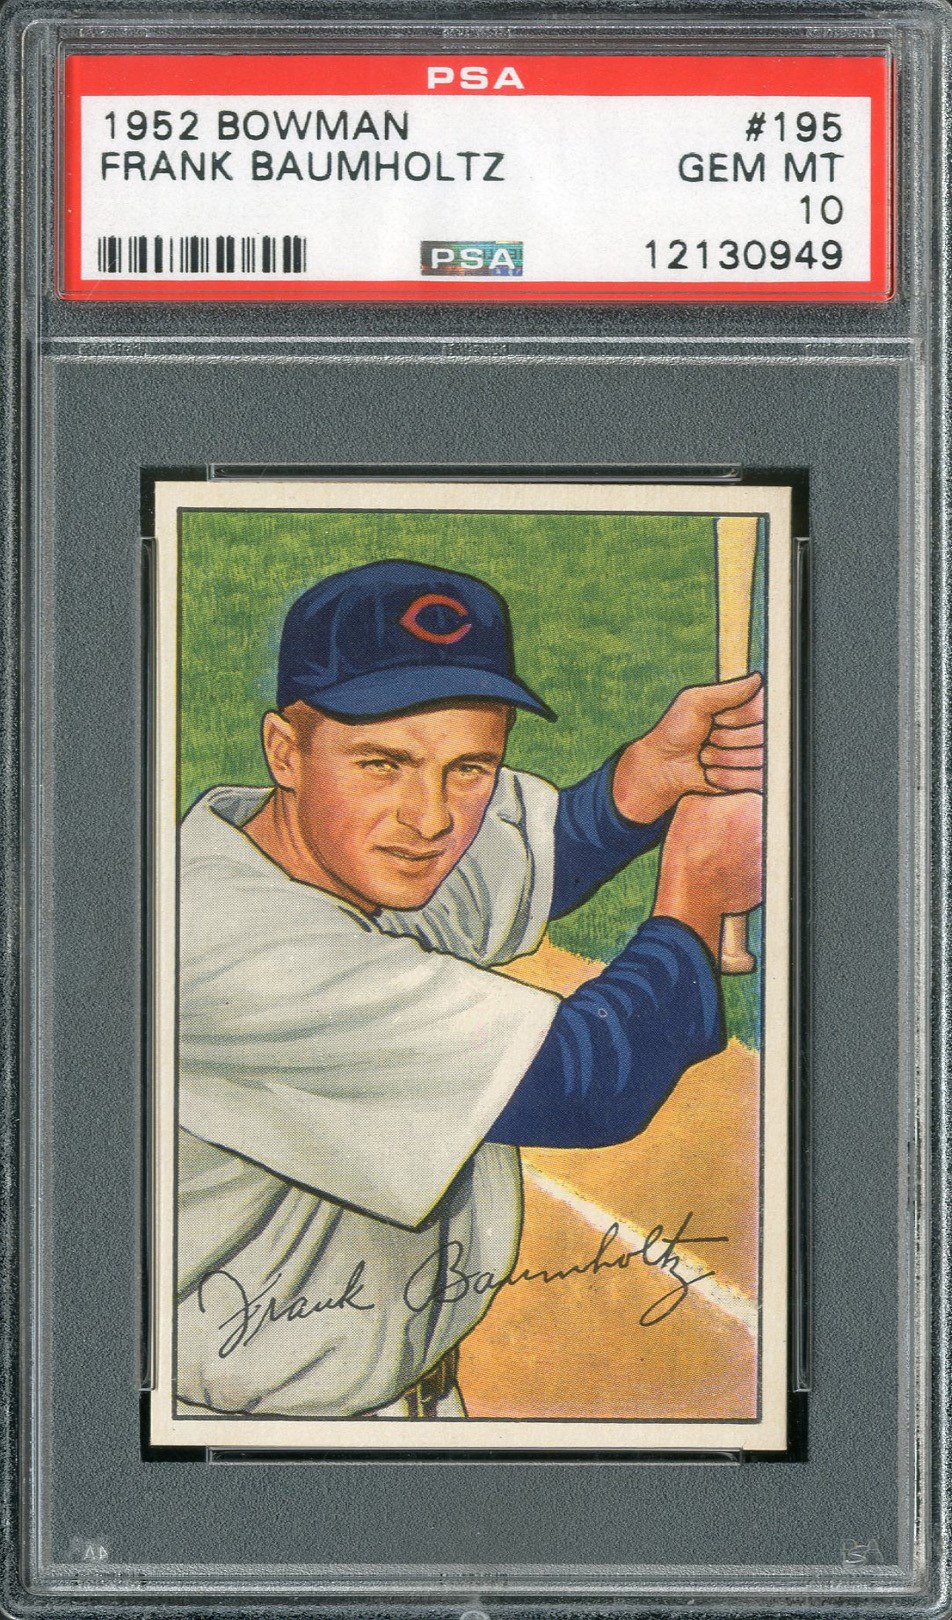 Baseball and Trading Cards - 1952 Bowman #195 Frank Baumholtz PSA GEM MINT 10